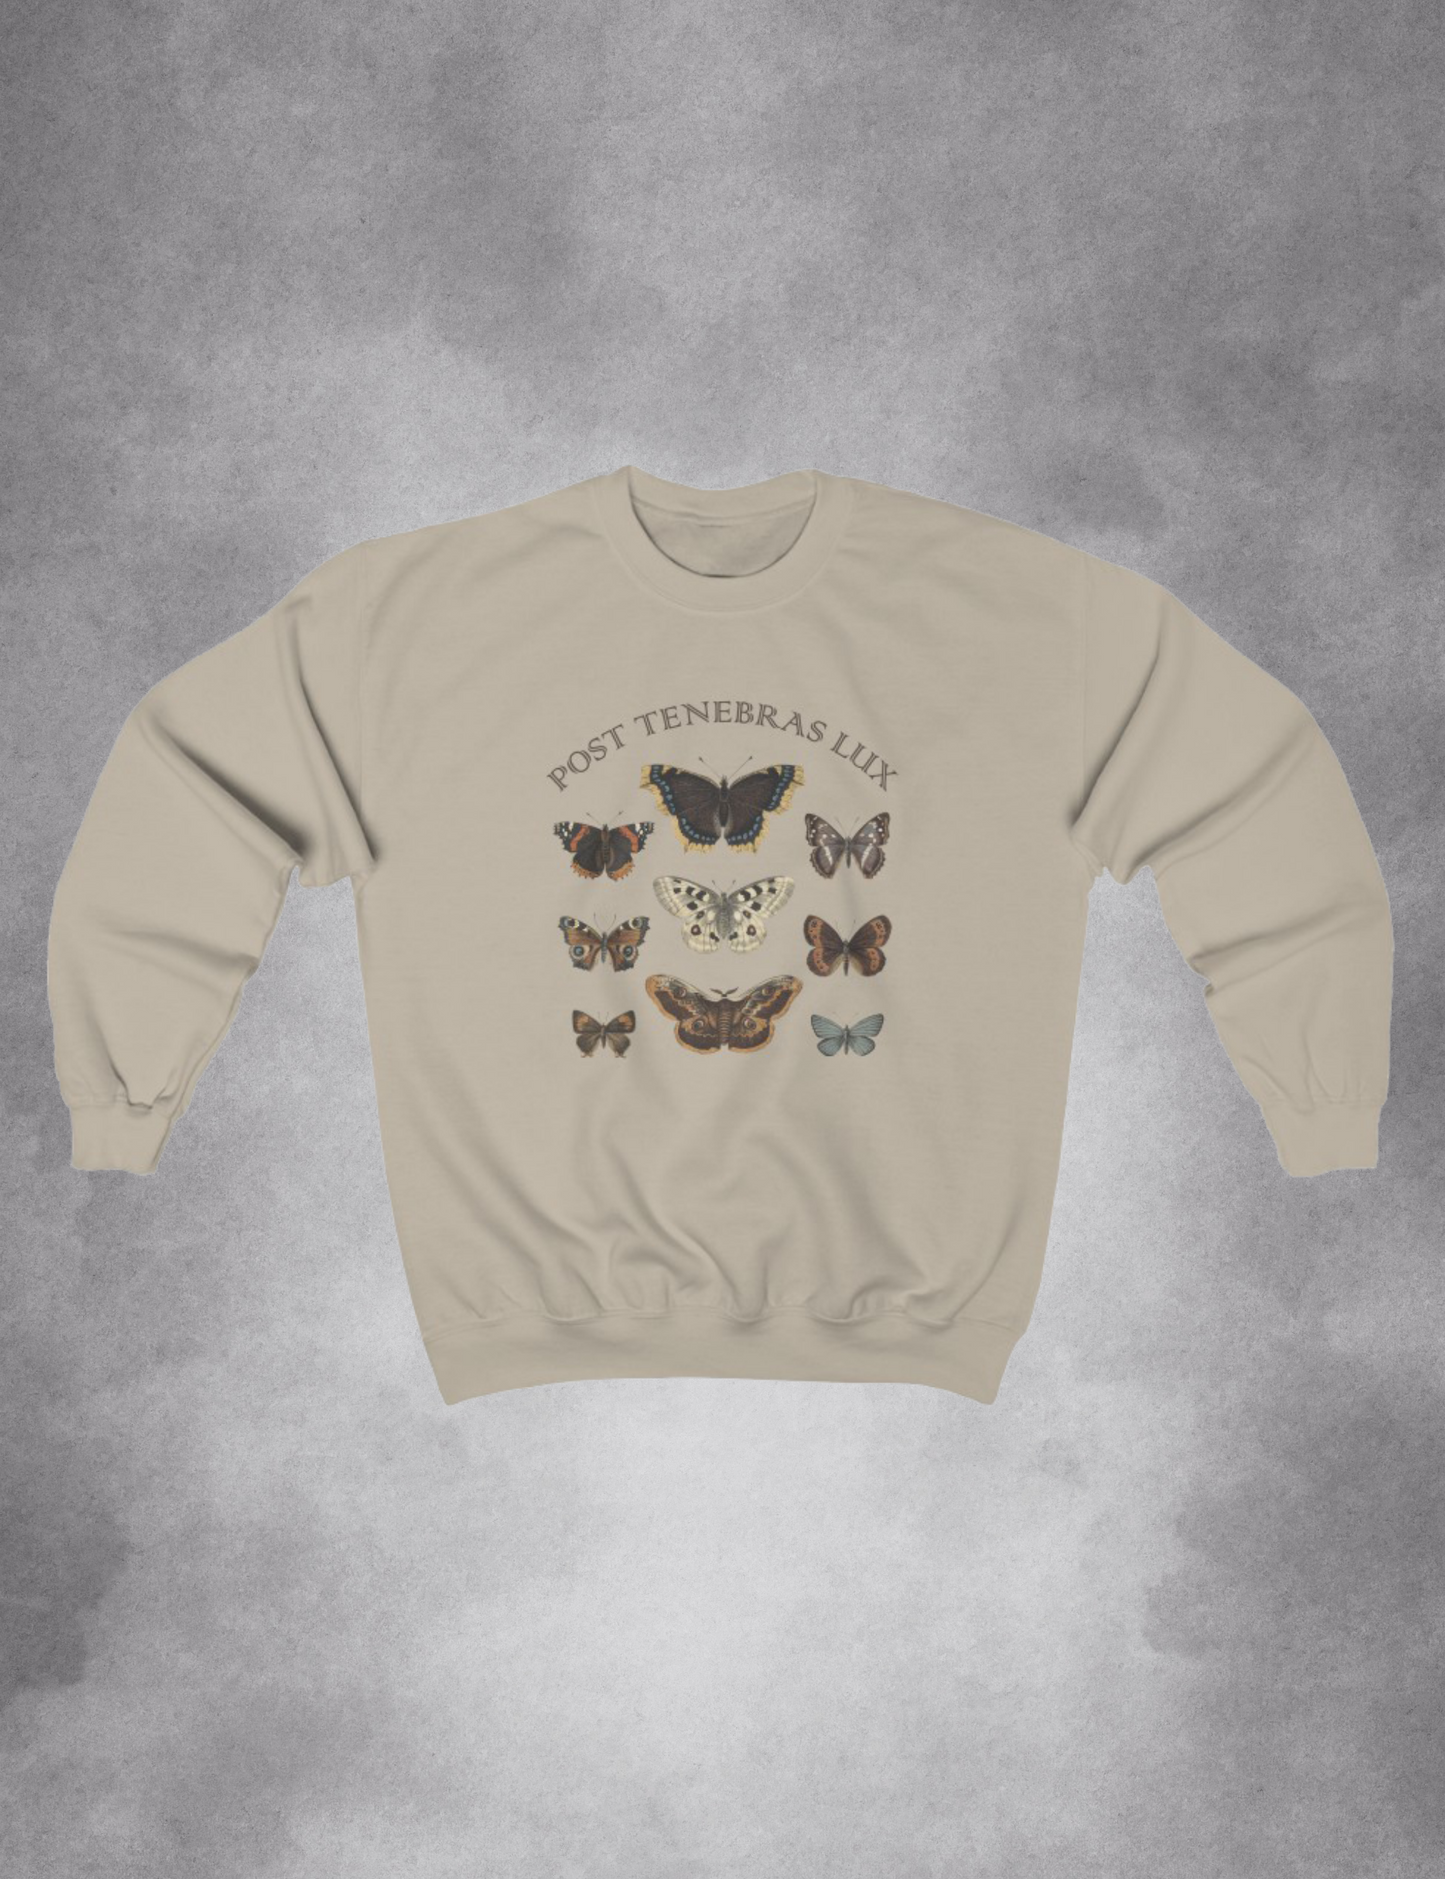 Dark Academia Post Tenebras Lux Moth Sweatshirt